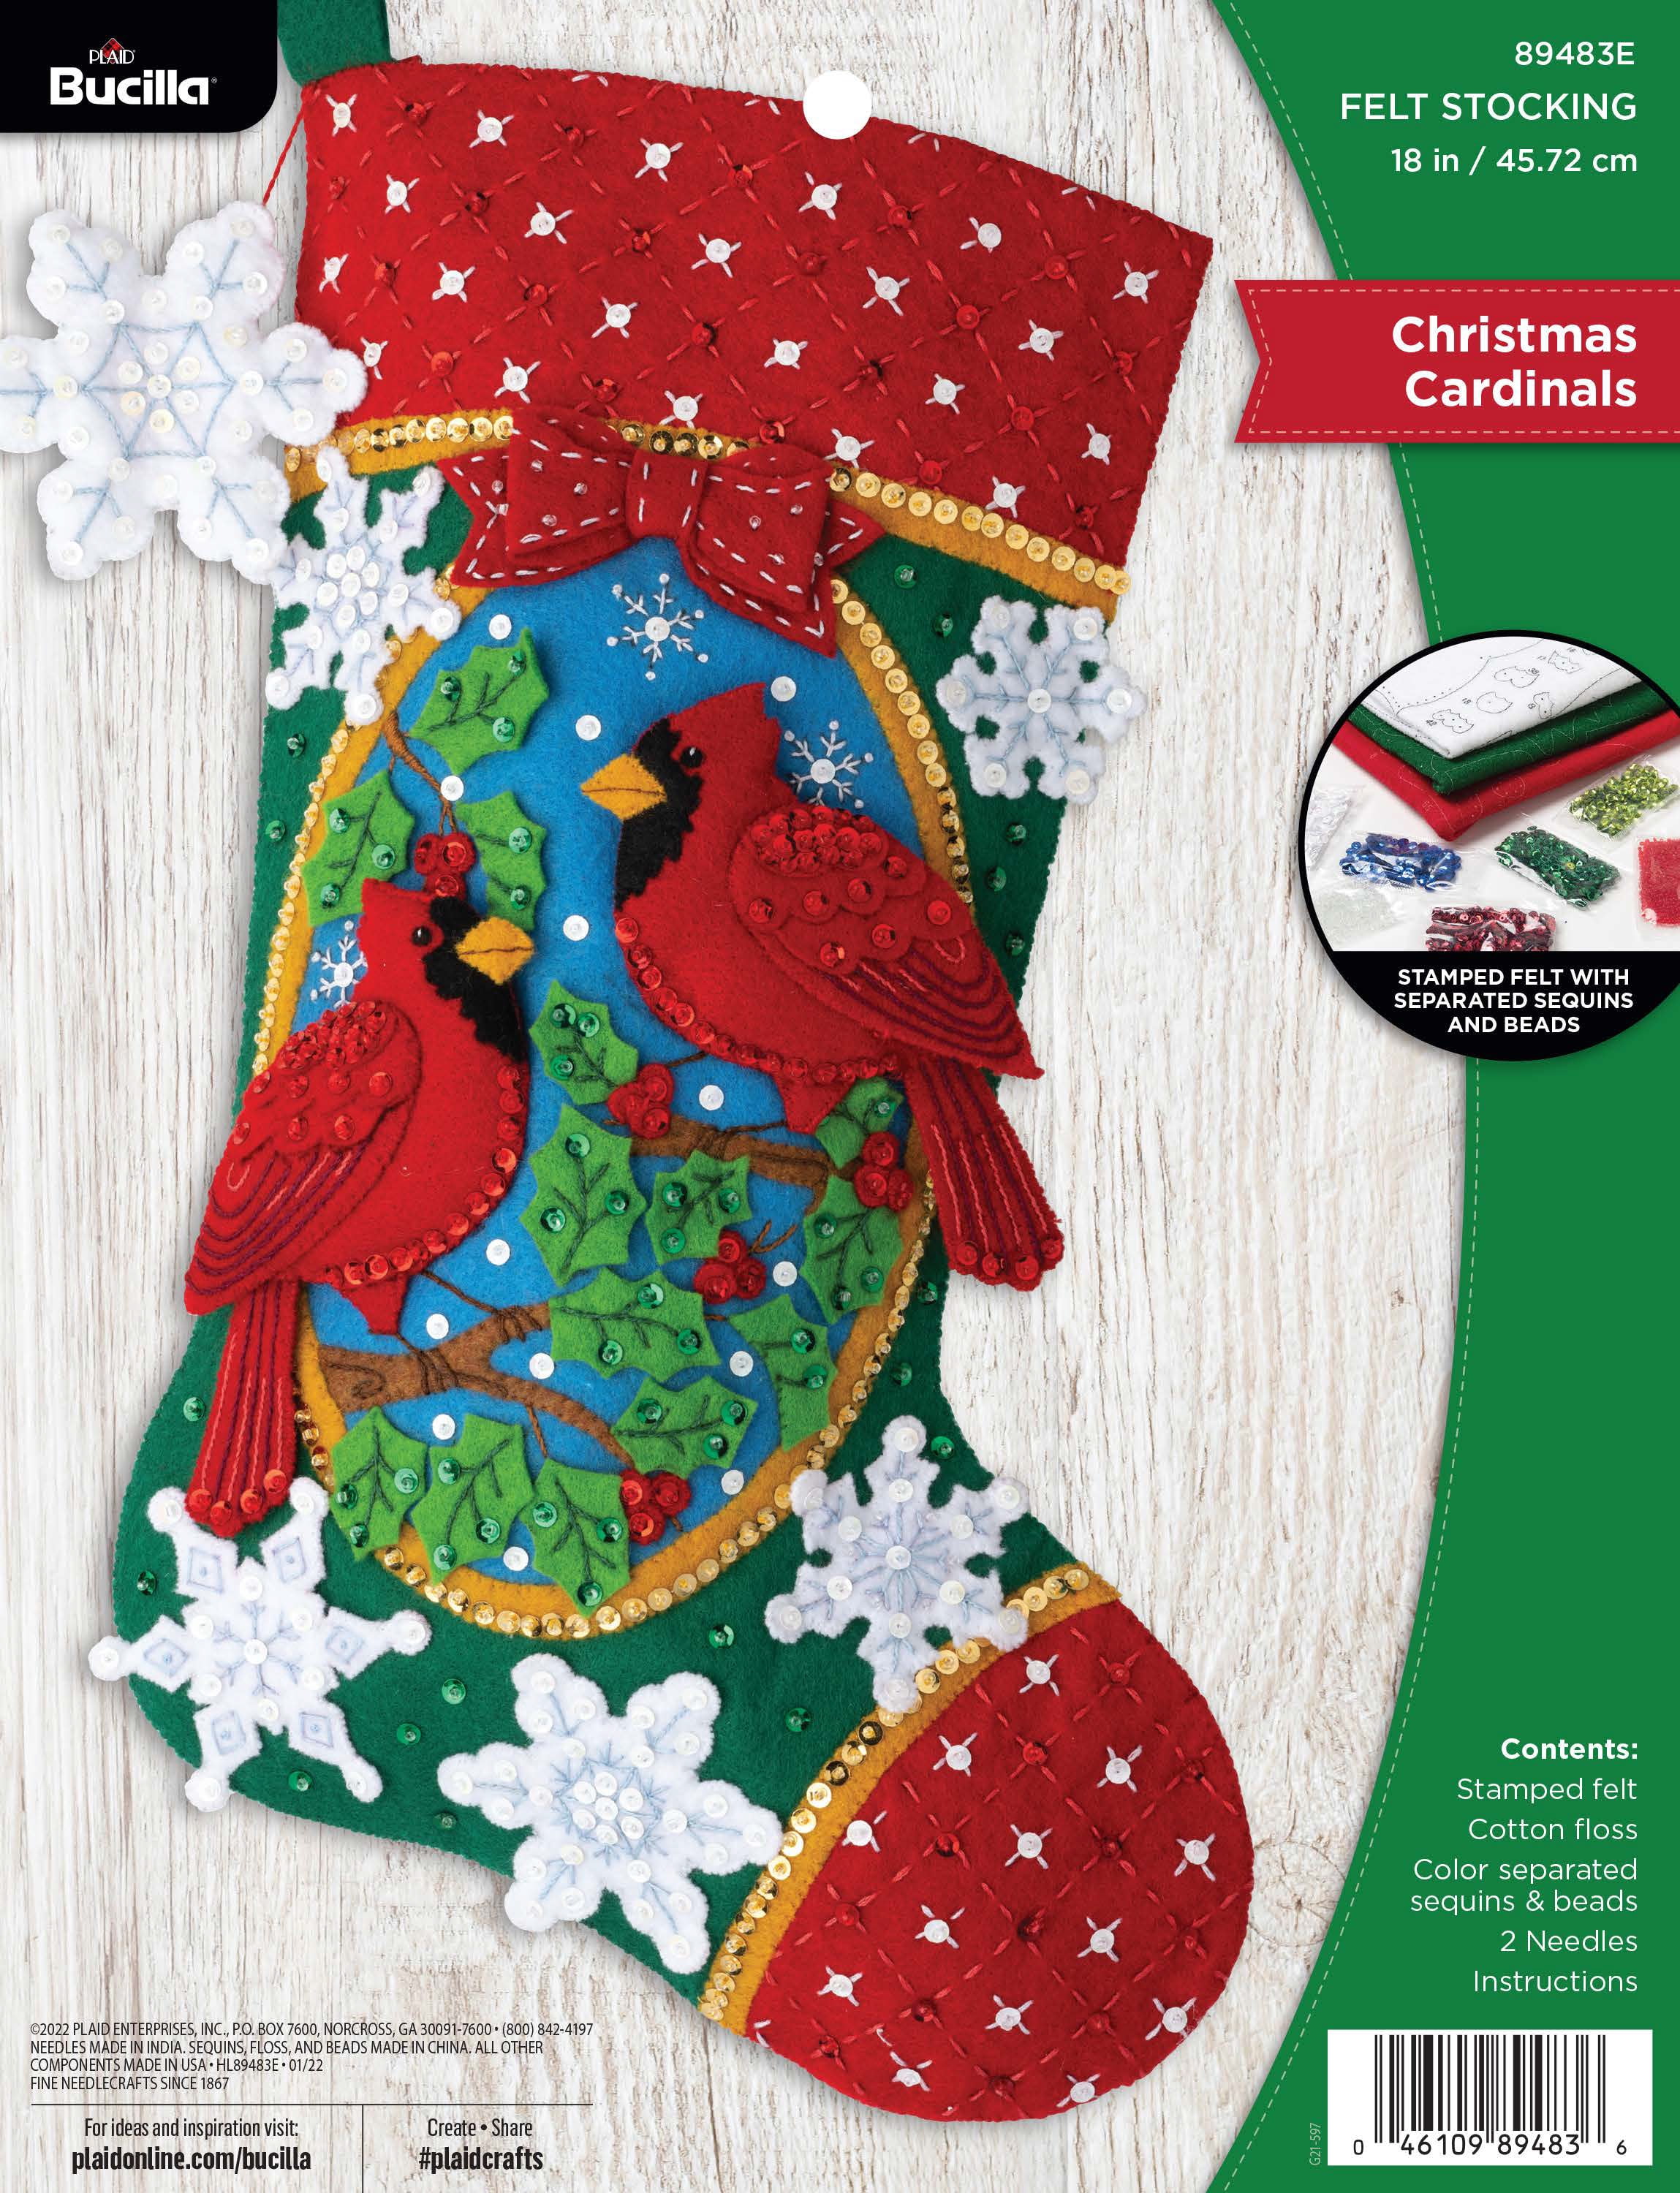 Bucilla Holiday Patchwork - Christmas Stocking - Felt Applique Kit